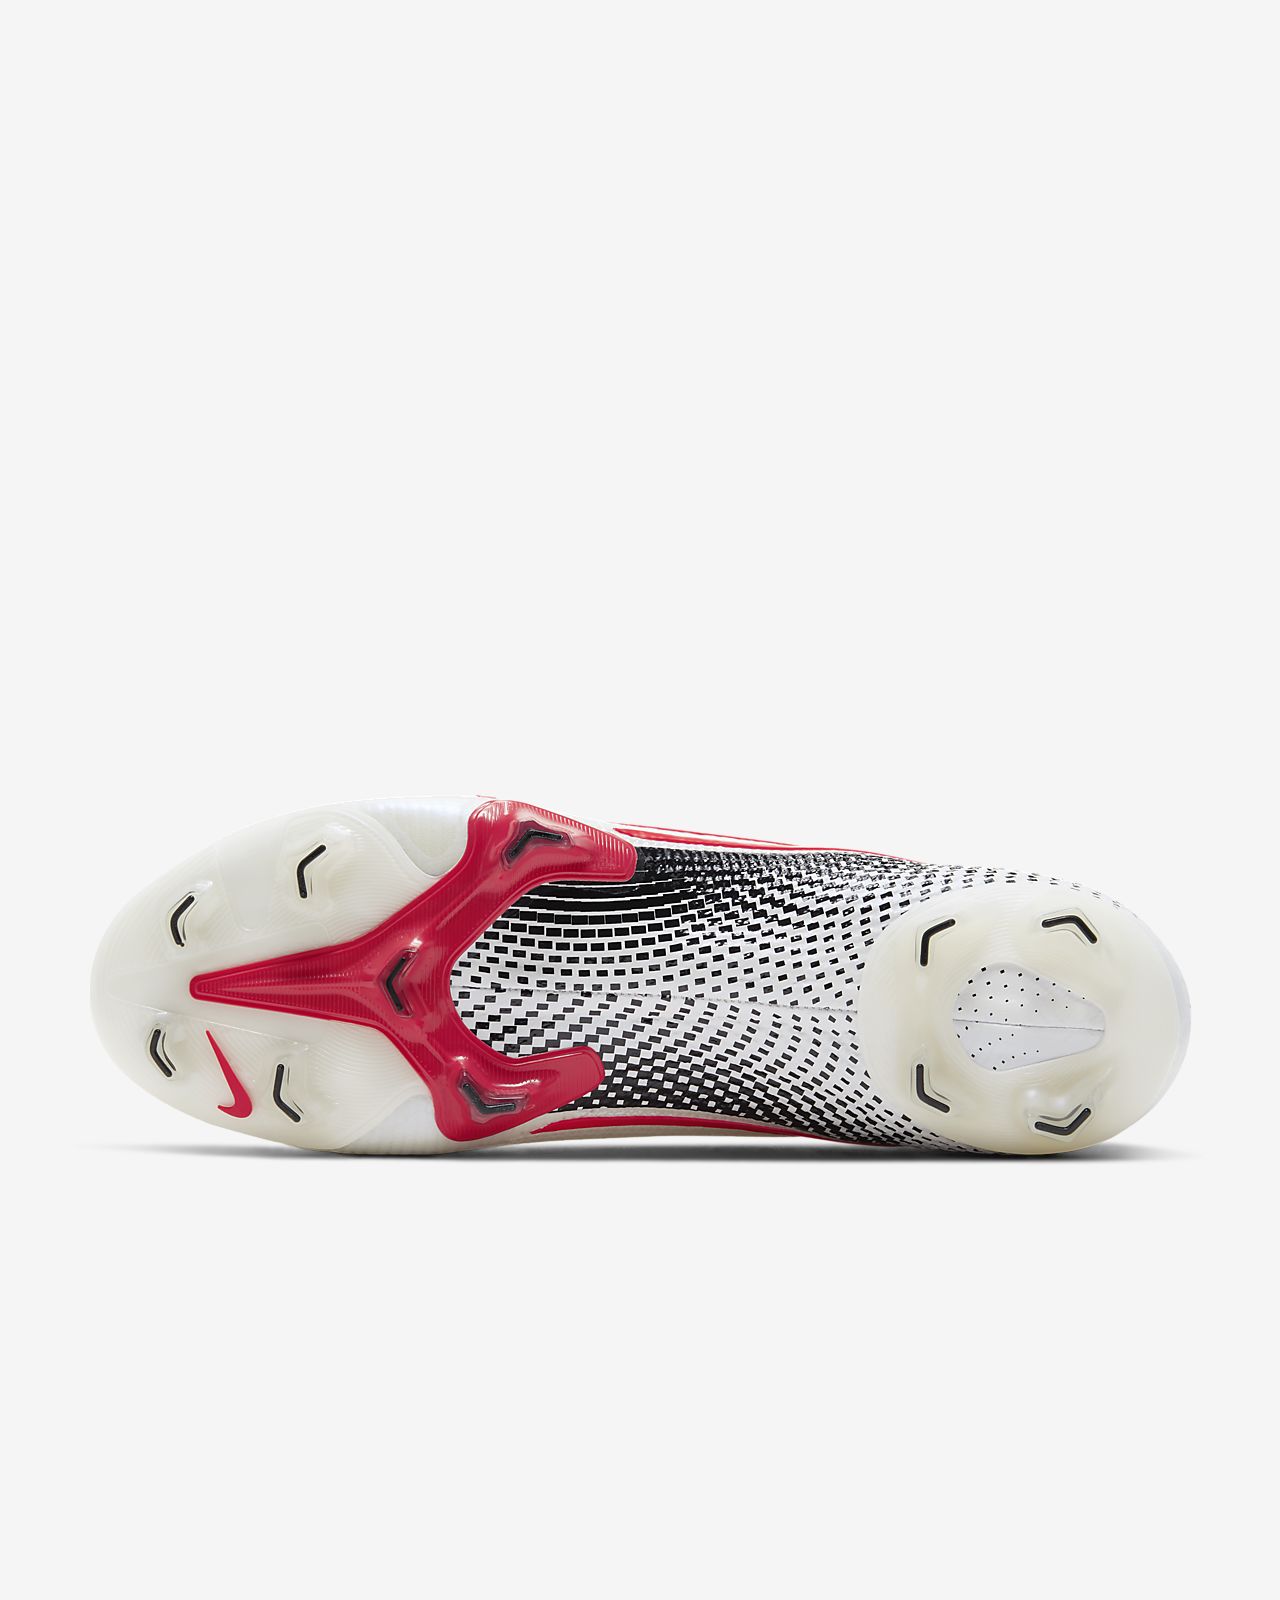 Sepatu Bola Soccer Nike Mercurial Superfly 7 Elite Red.